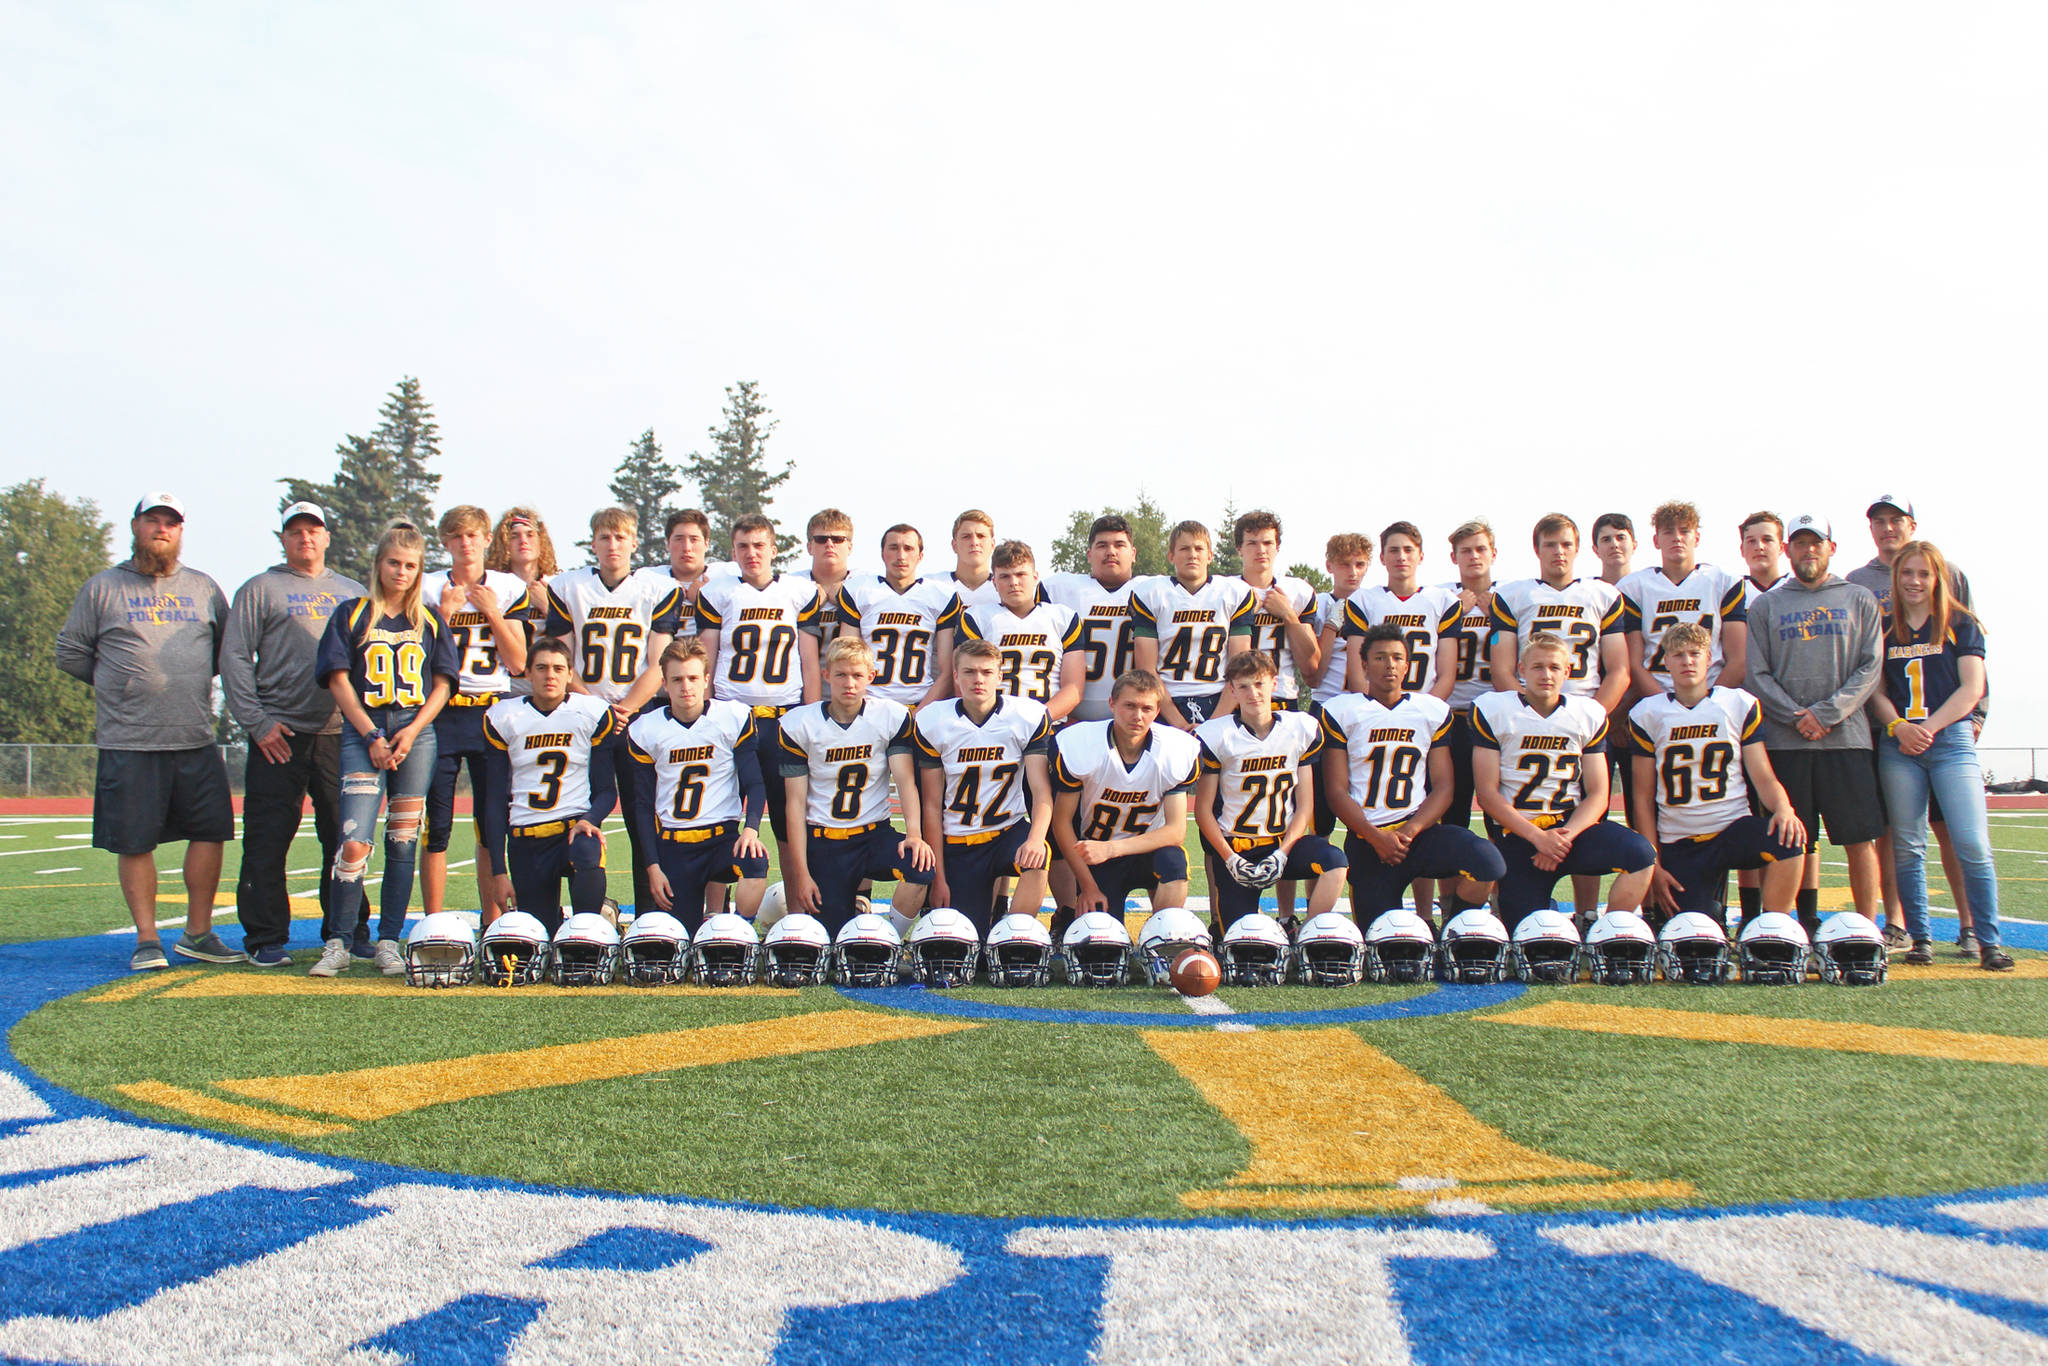 The varsity Homer football team poses for a photo on the Homer High School turf field on Thursday, Aug. 22, 2019 in Homer, Alaska. (Photo by Megan Pacer/Homer News)